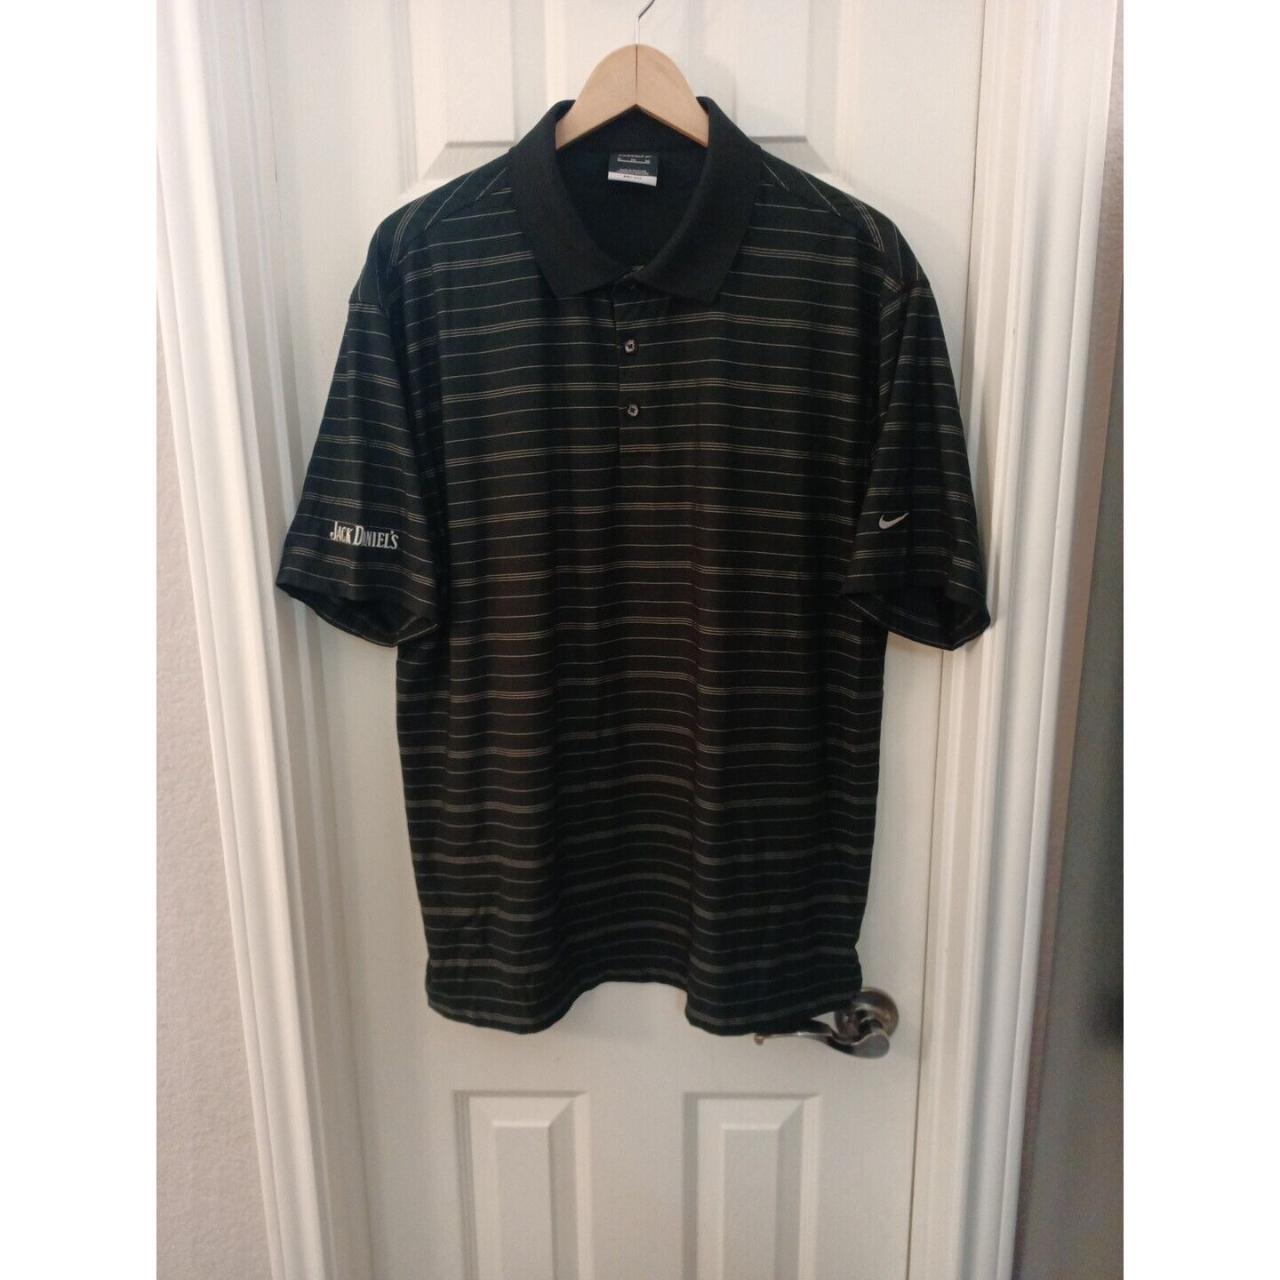 Men's Nike Golf Striped Polo Shirt Jack Daniel's... - Depop